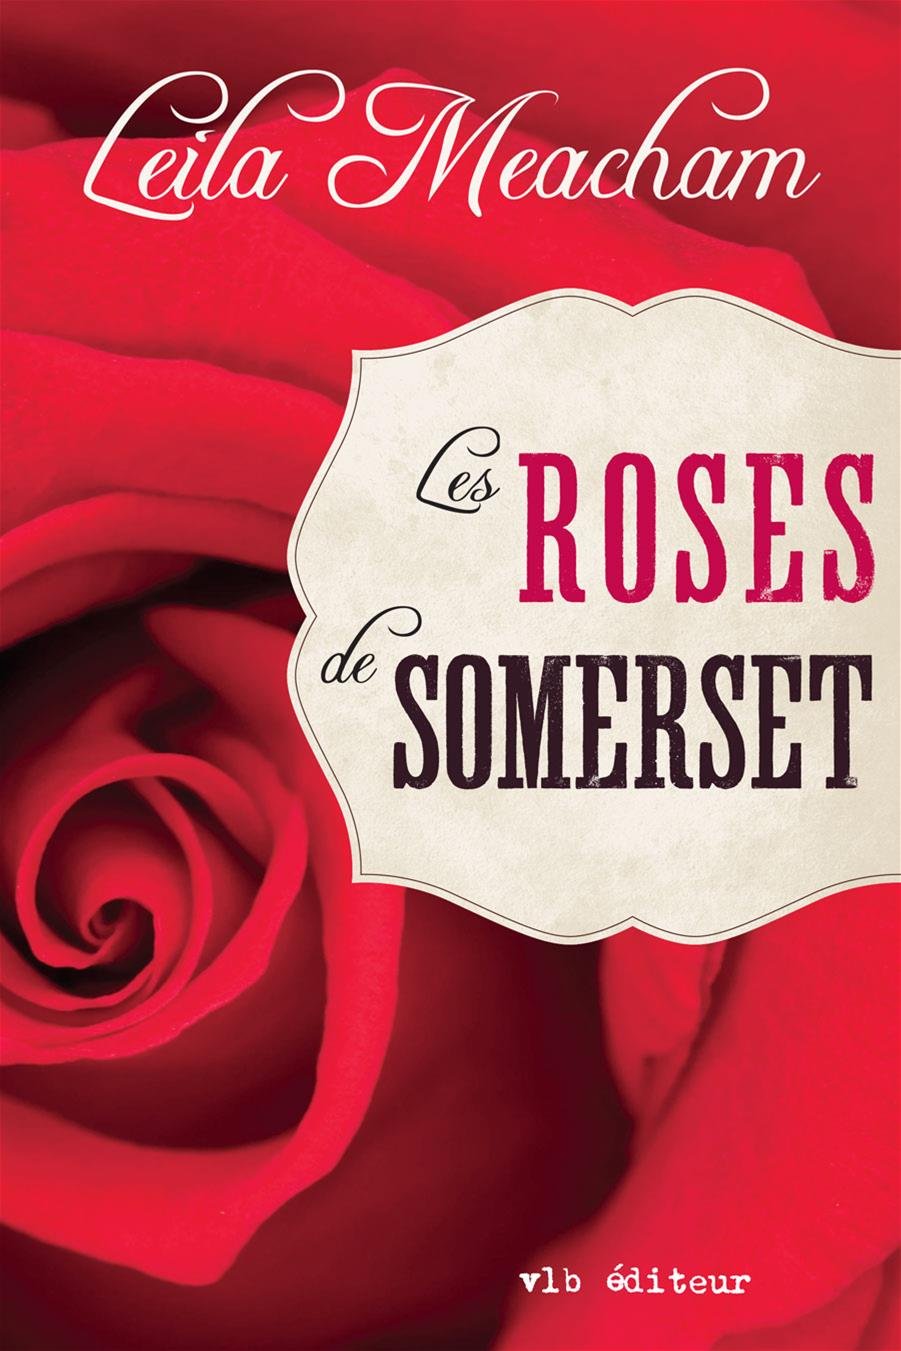 Les roses de Somerset - Leila Meacham